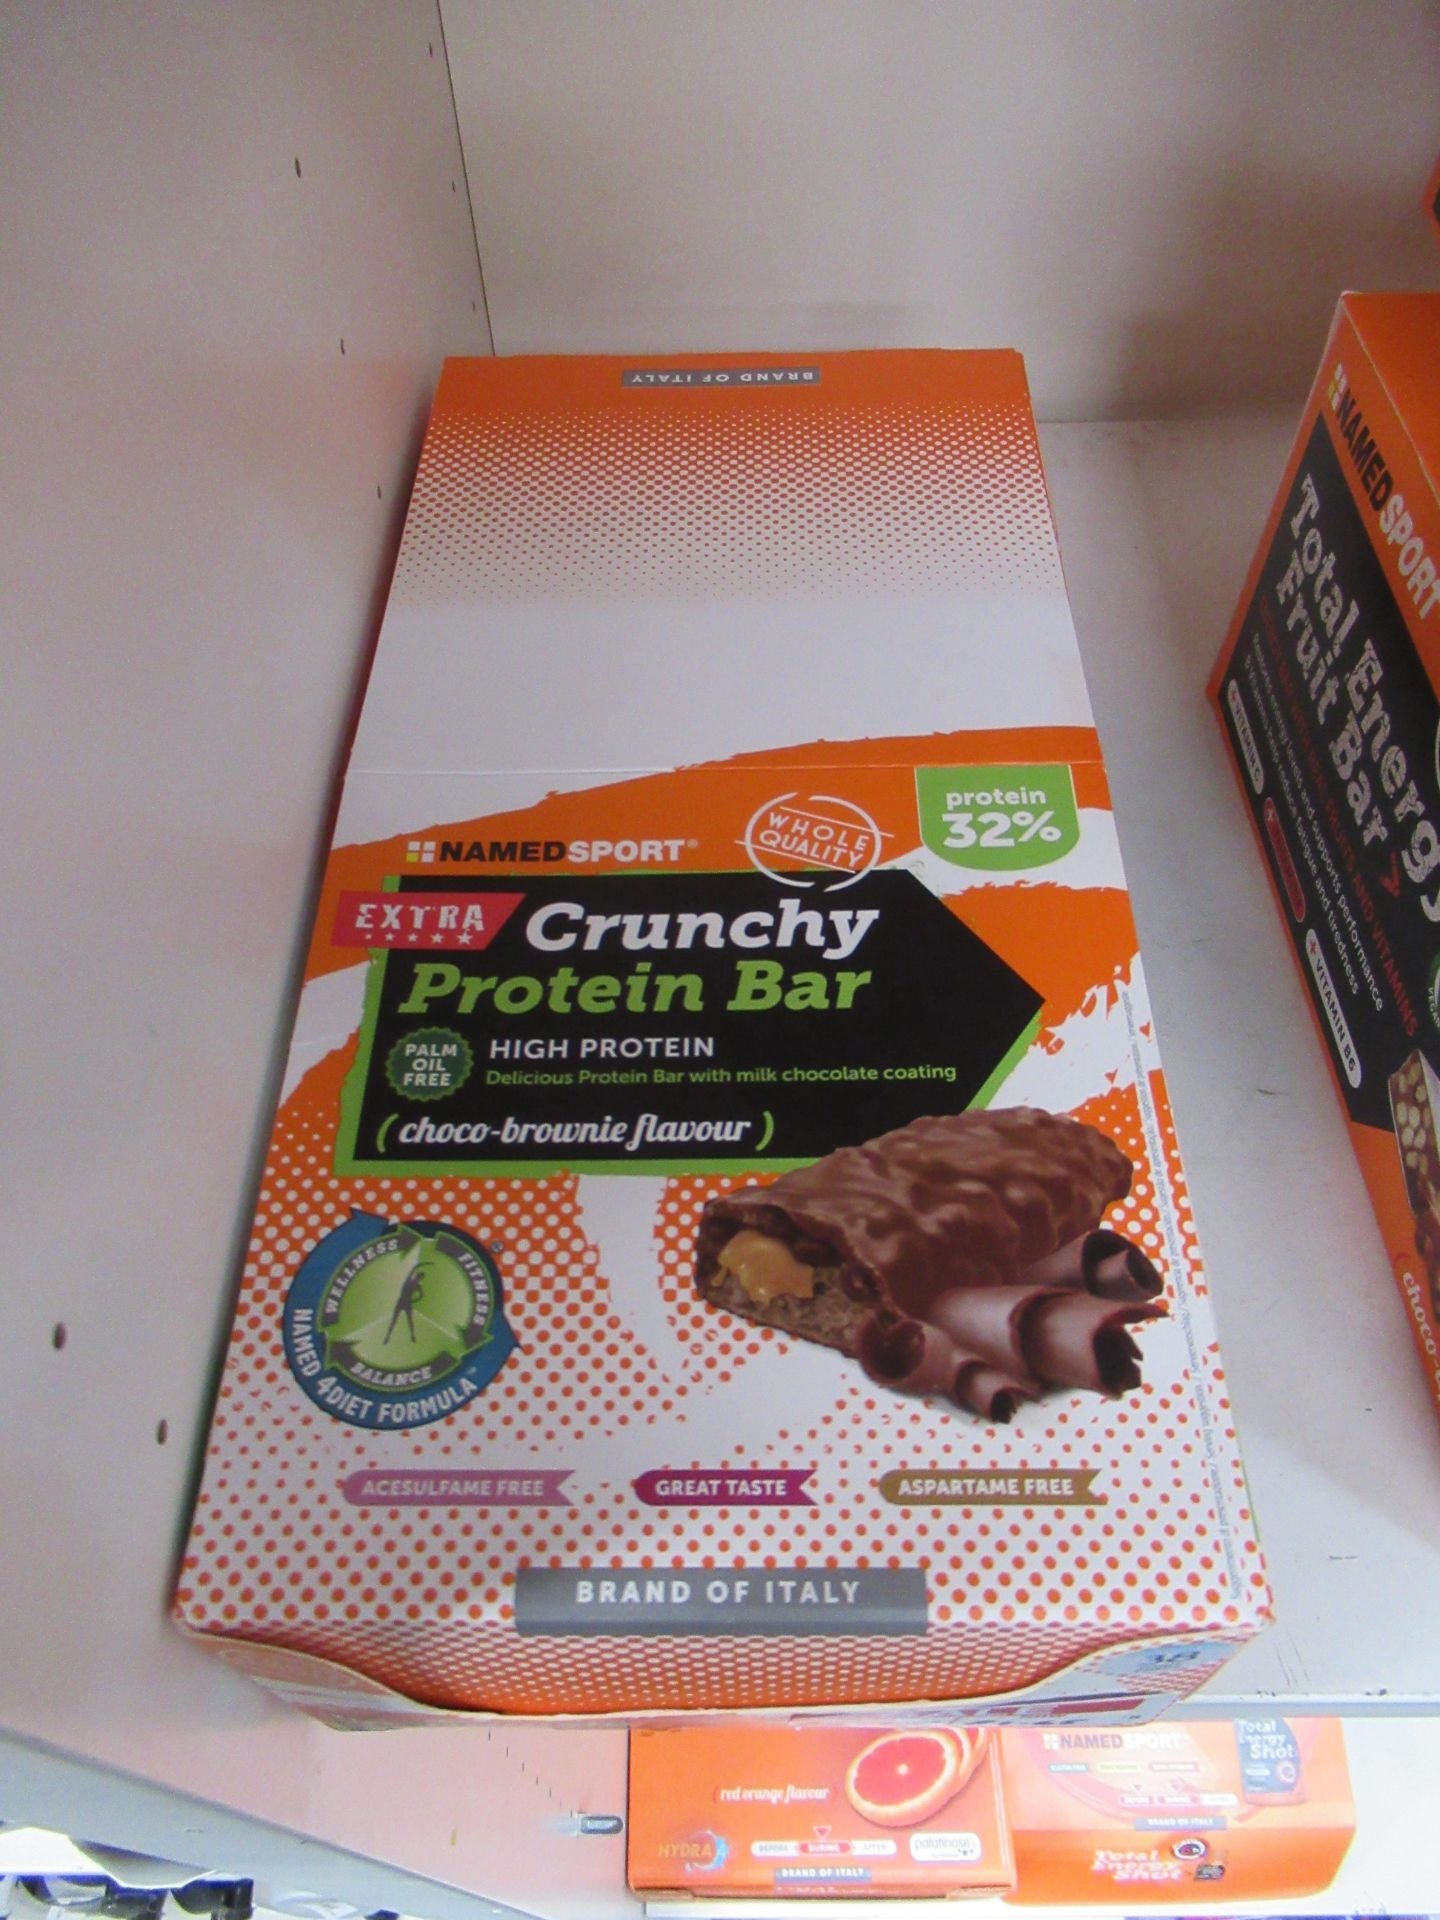 2 x shelves of NamedSport Total Energy supplements featuring energy bars, fruit bars, protein bars, - Image 2 of 5